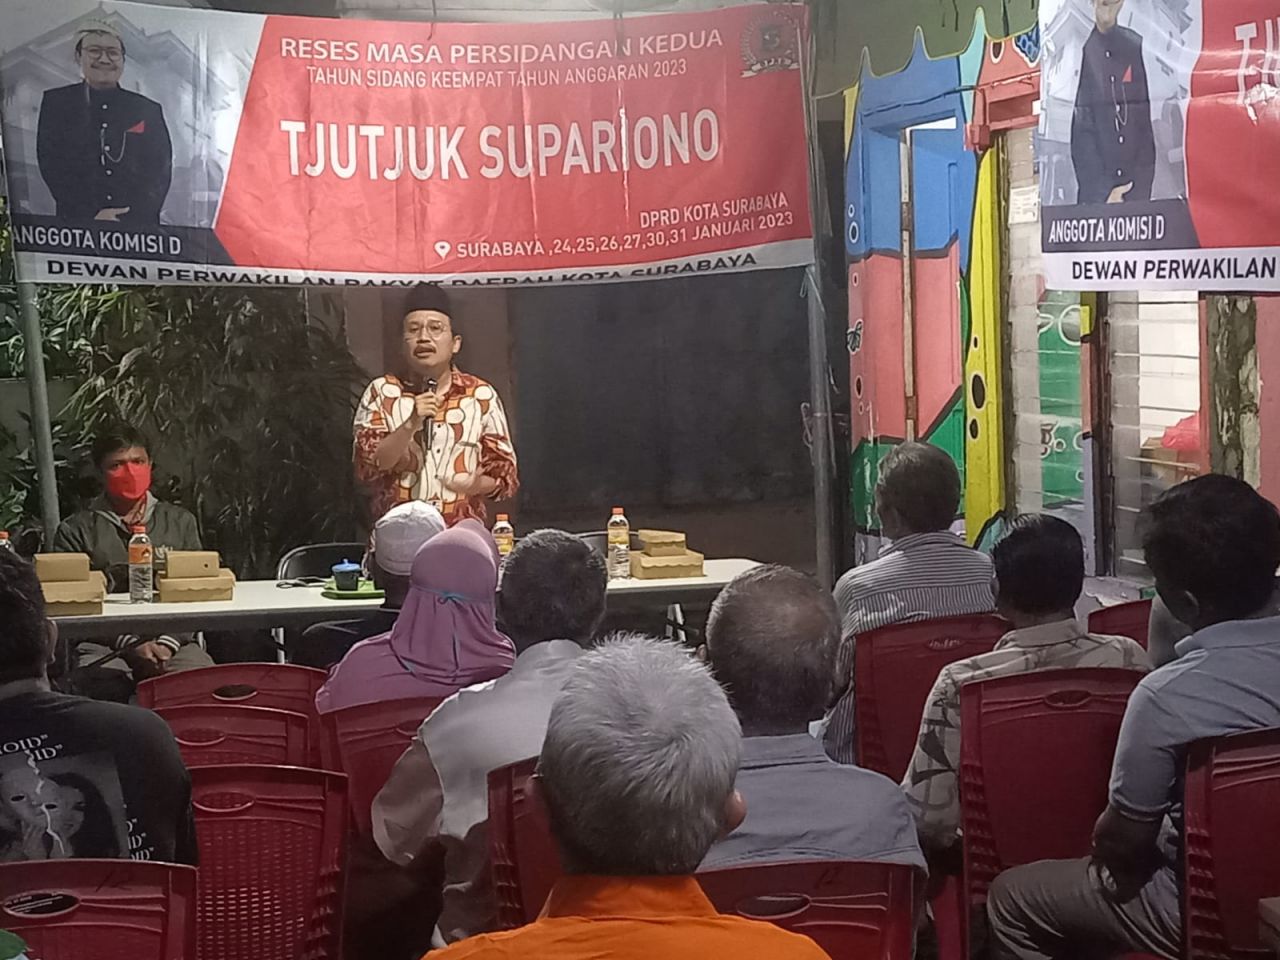 Tjujuk Supariono Lakukan Reses di Kelurahan Putat Jaya